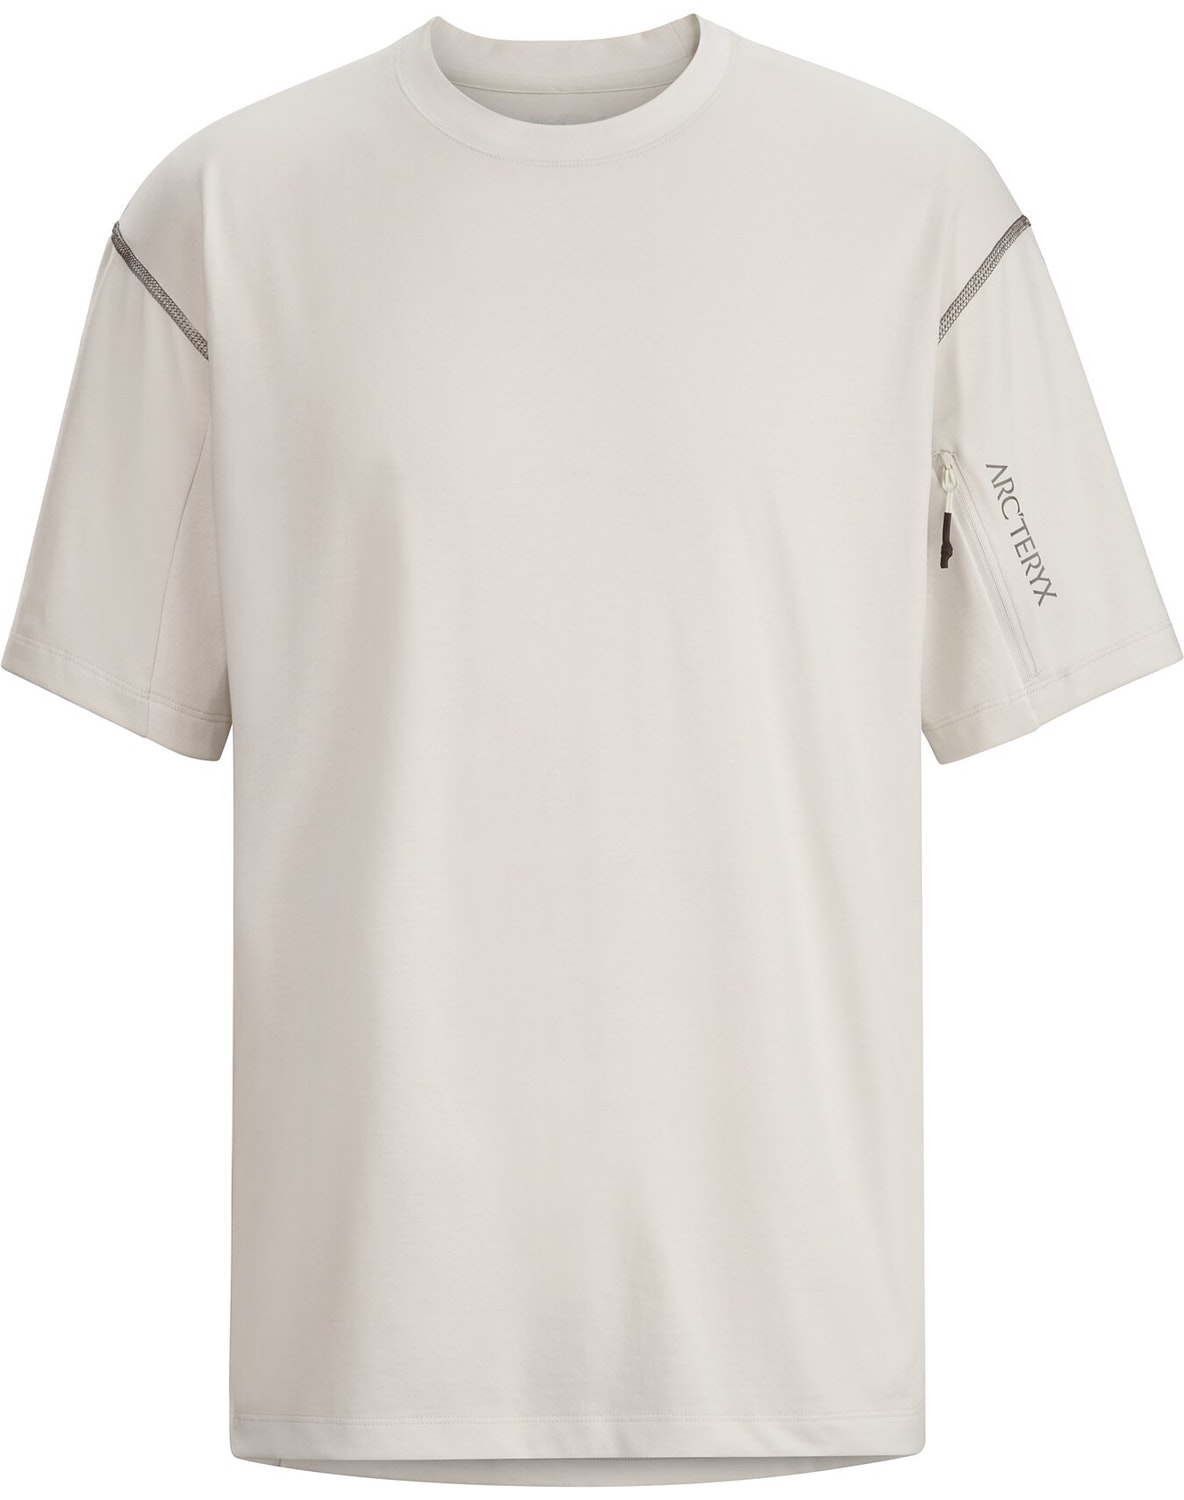 T-shirt Arc'teryx Copal Pocket Uomo Bianche - IT-51153739